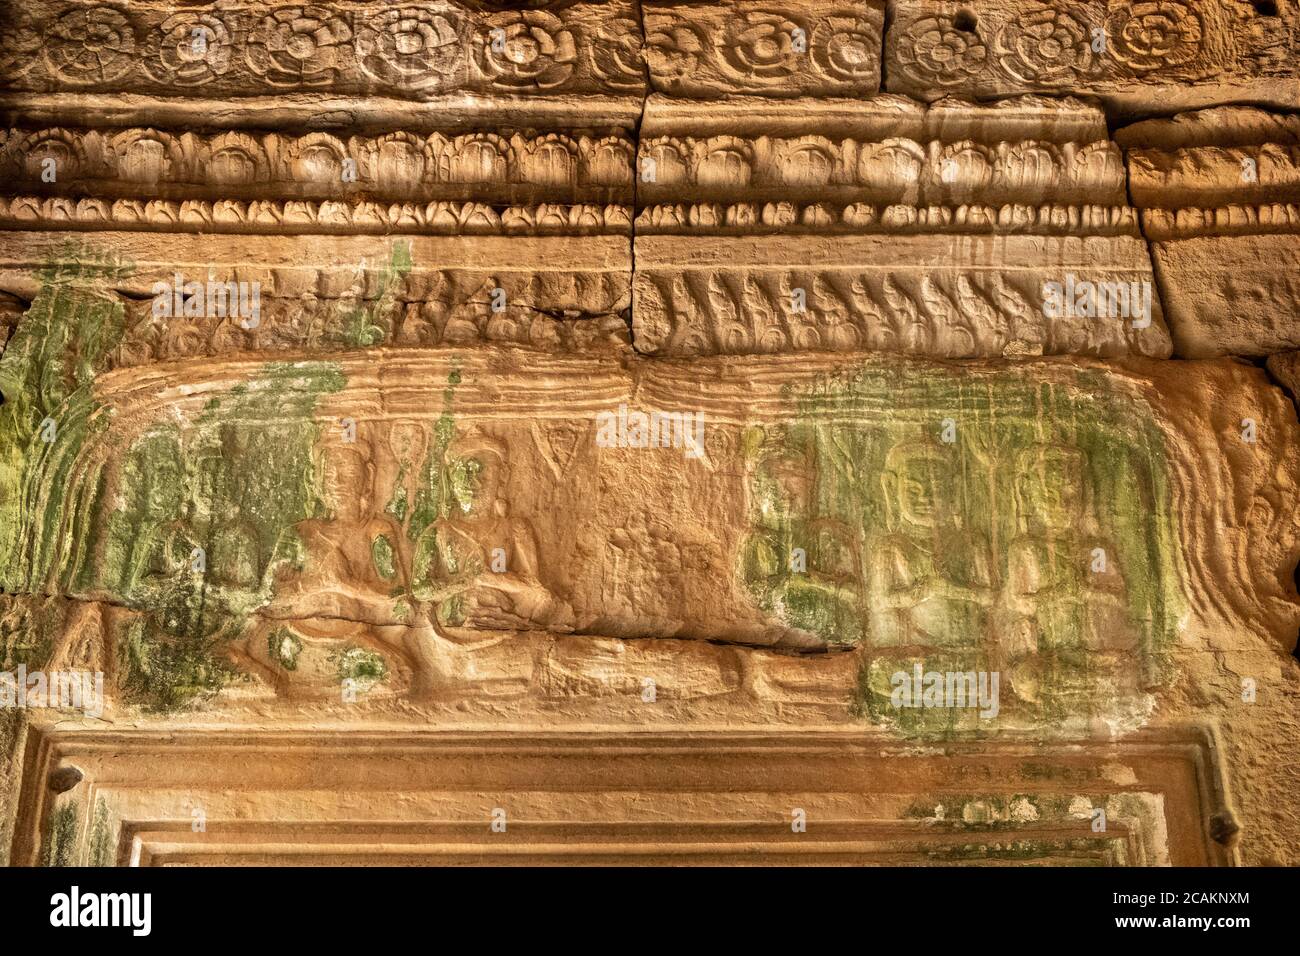 Le temple Bayon, Angkor Thom, Siem Reap, Cambodge Banque D'Images